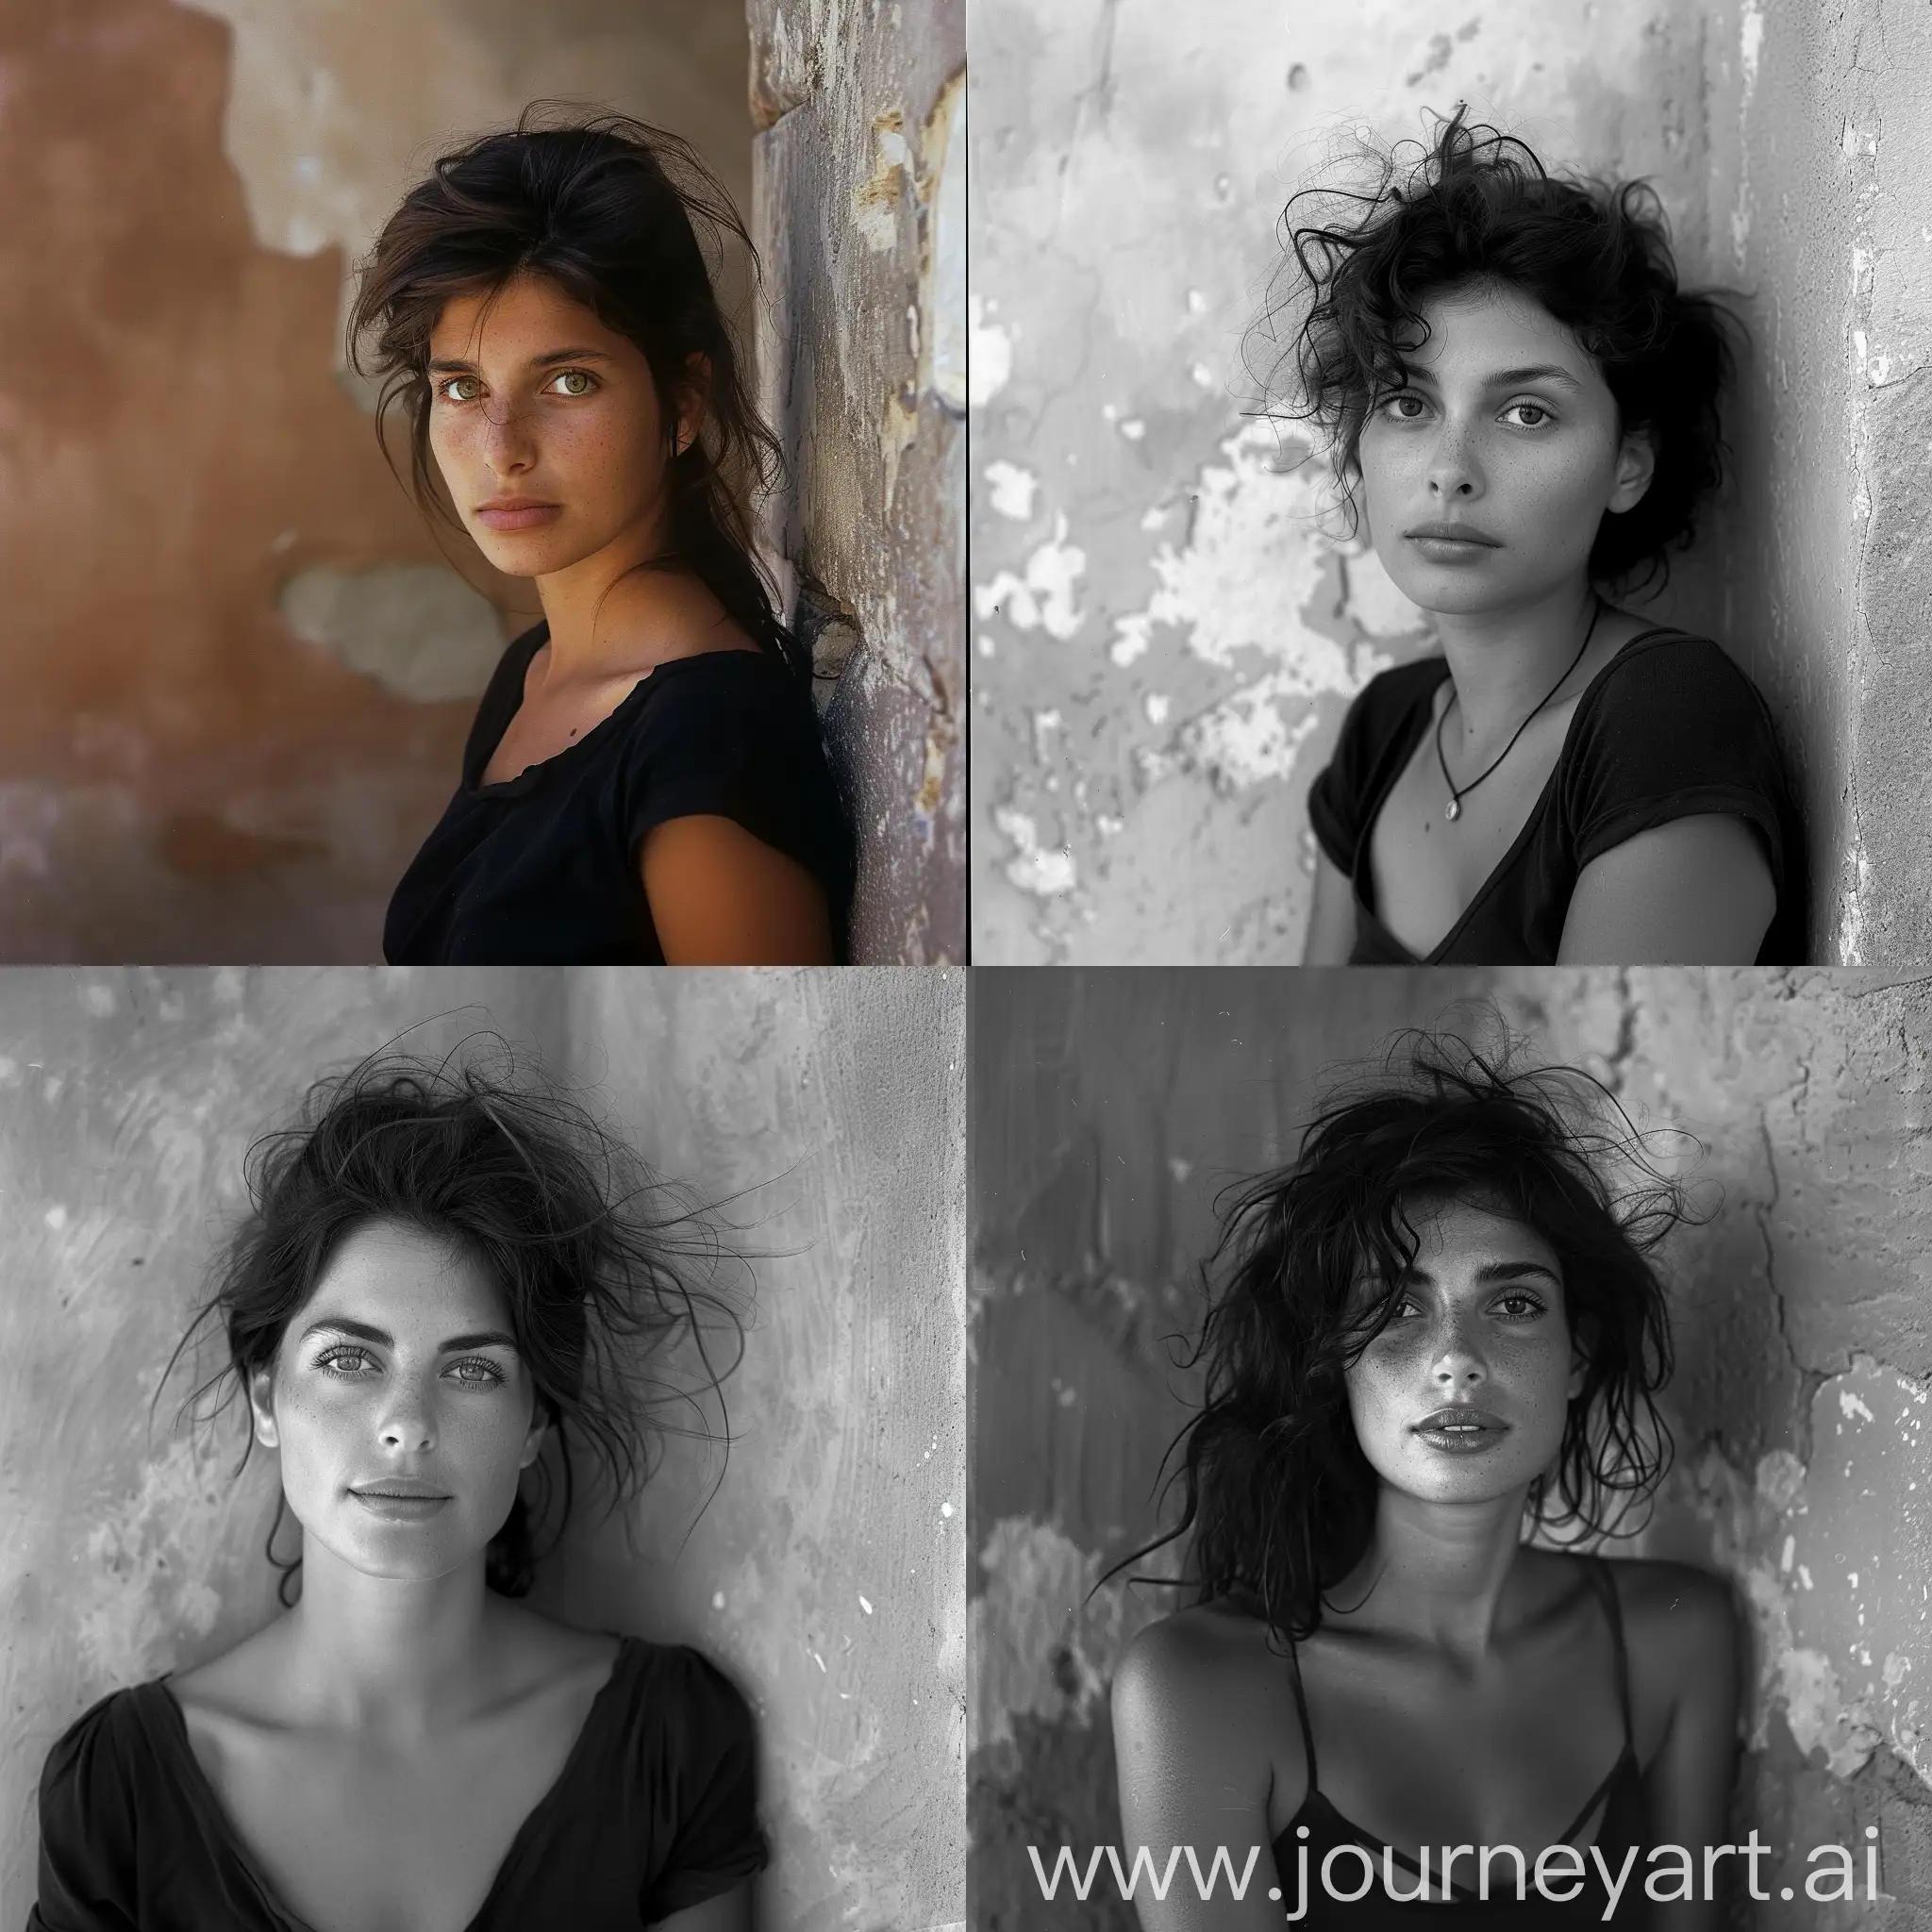 Joyful-Italian-Woman-Poses-Playfully-Against-Wall-in-Summer-Light